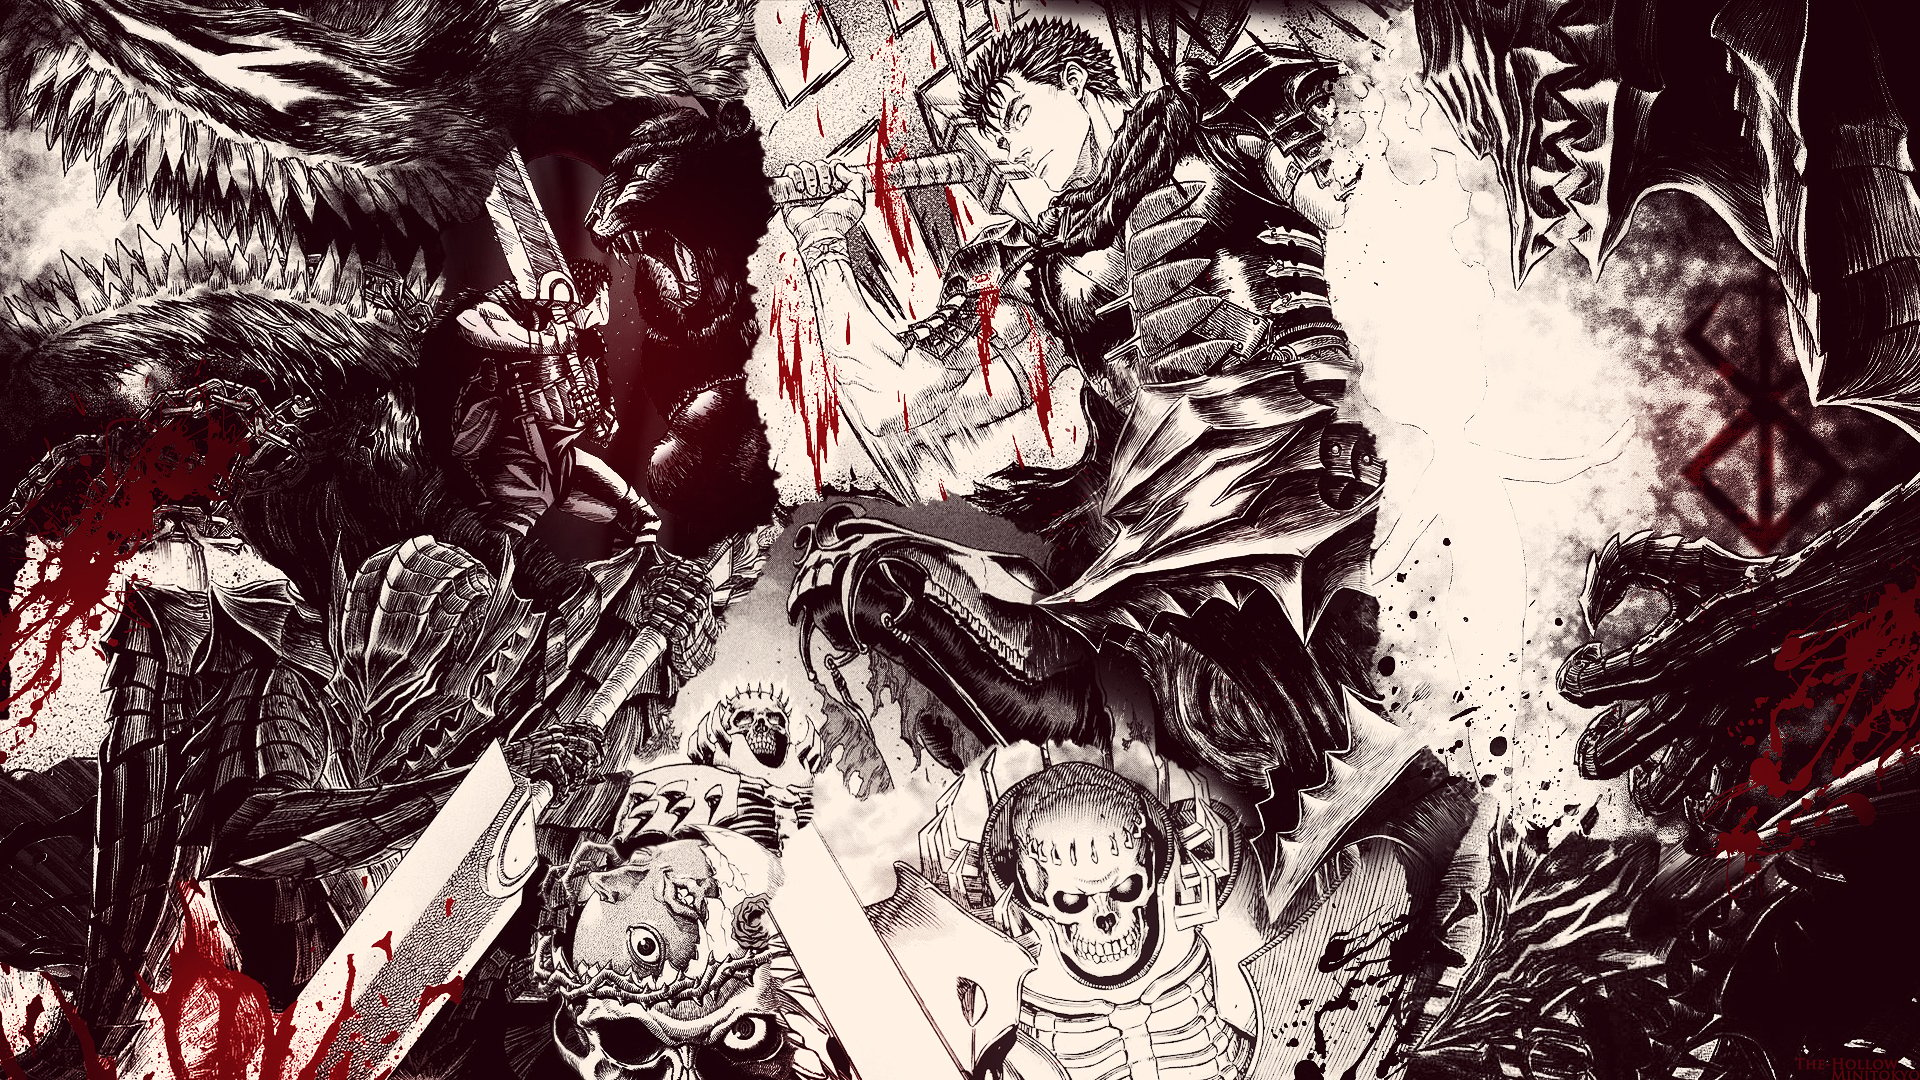 berserk blood dark skulls battles evil weapons sword macabre wallpaper